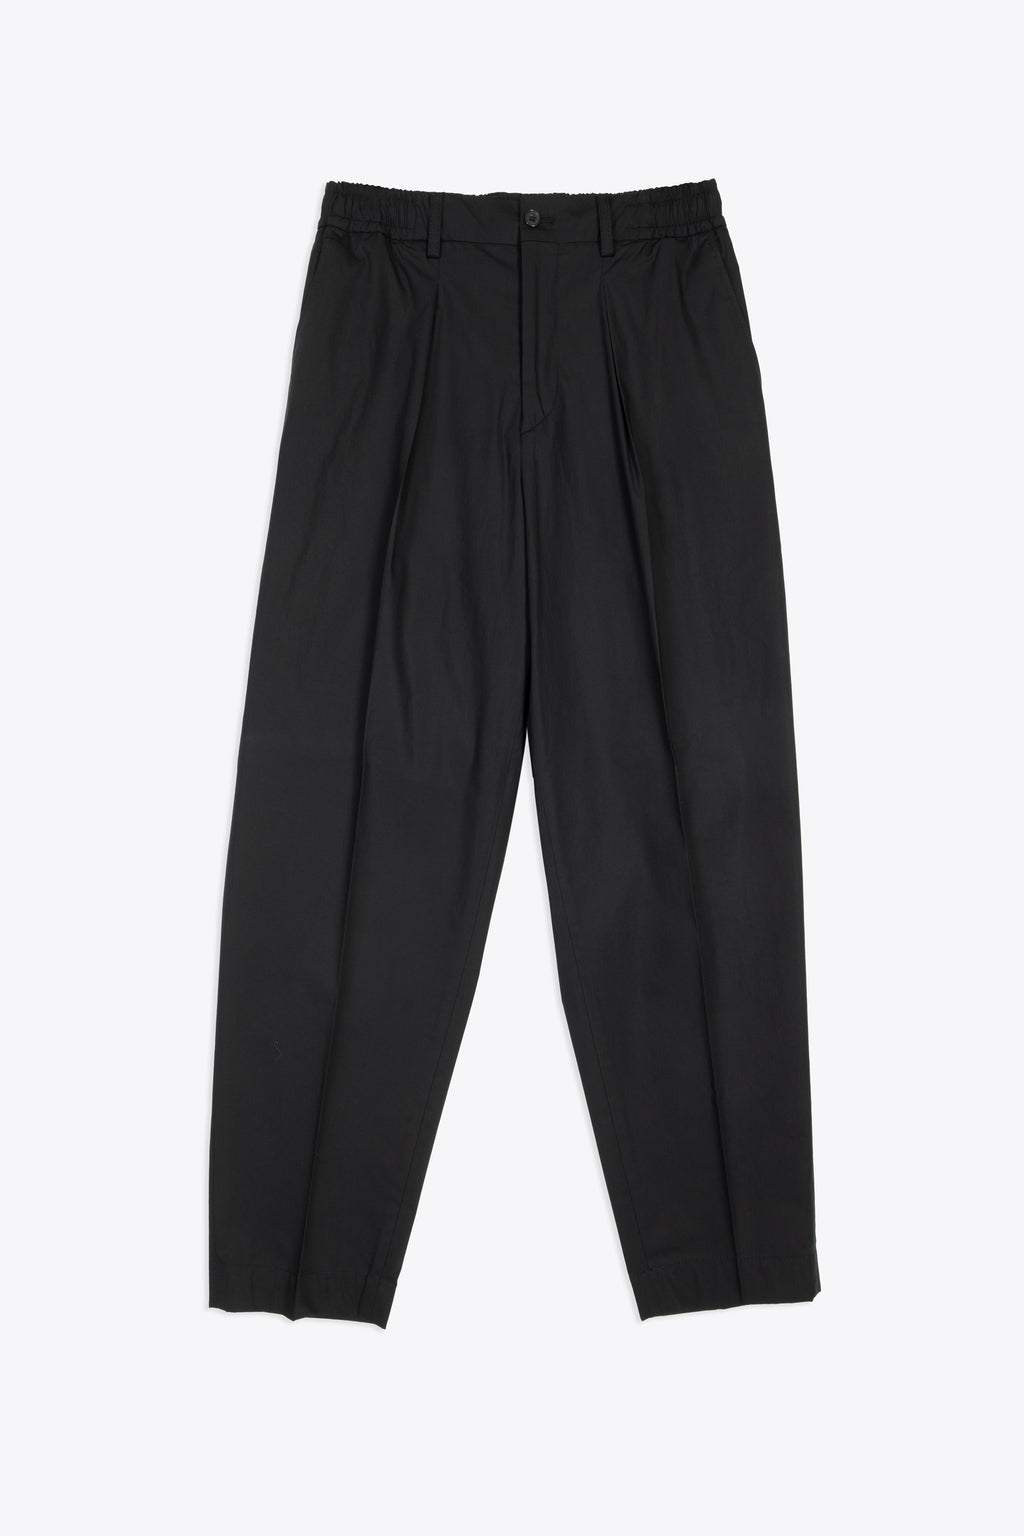 alt-image__Black-cotton-cropped-pant-with-elastic-waistband